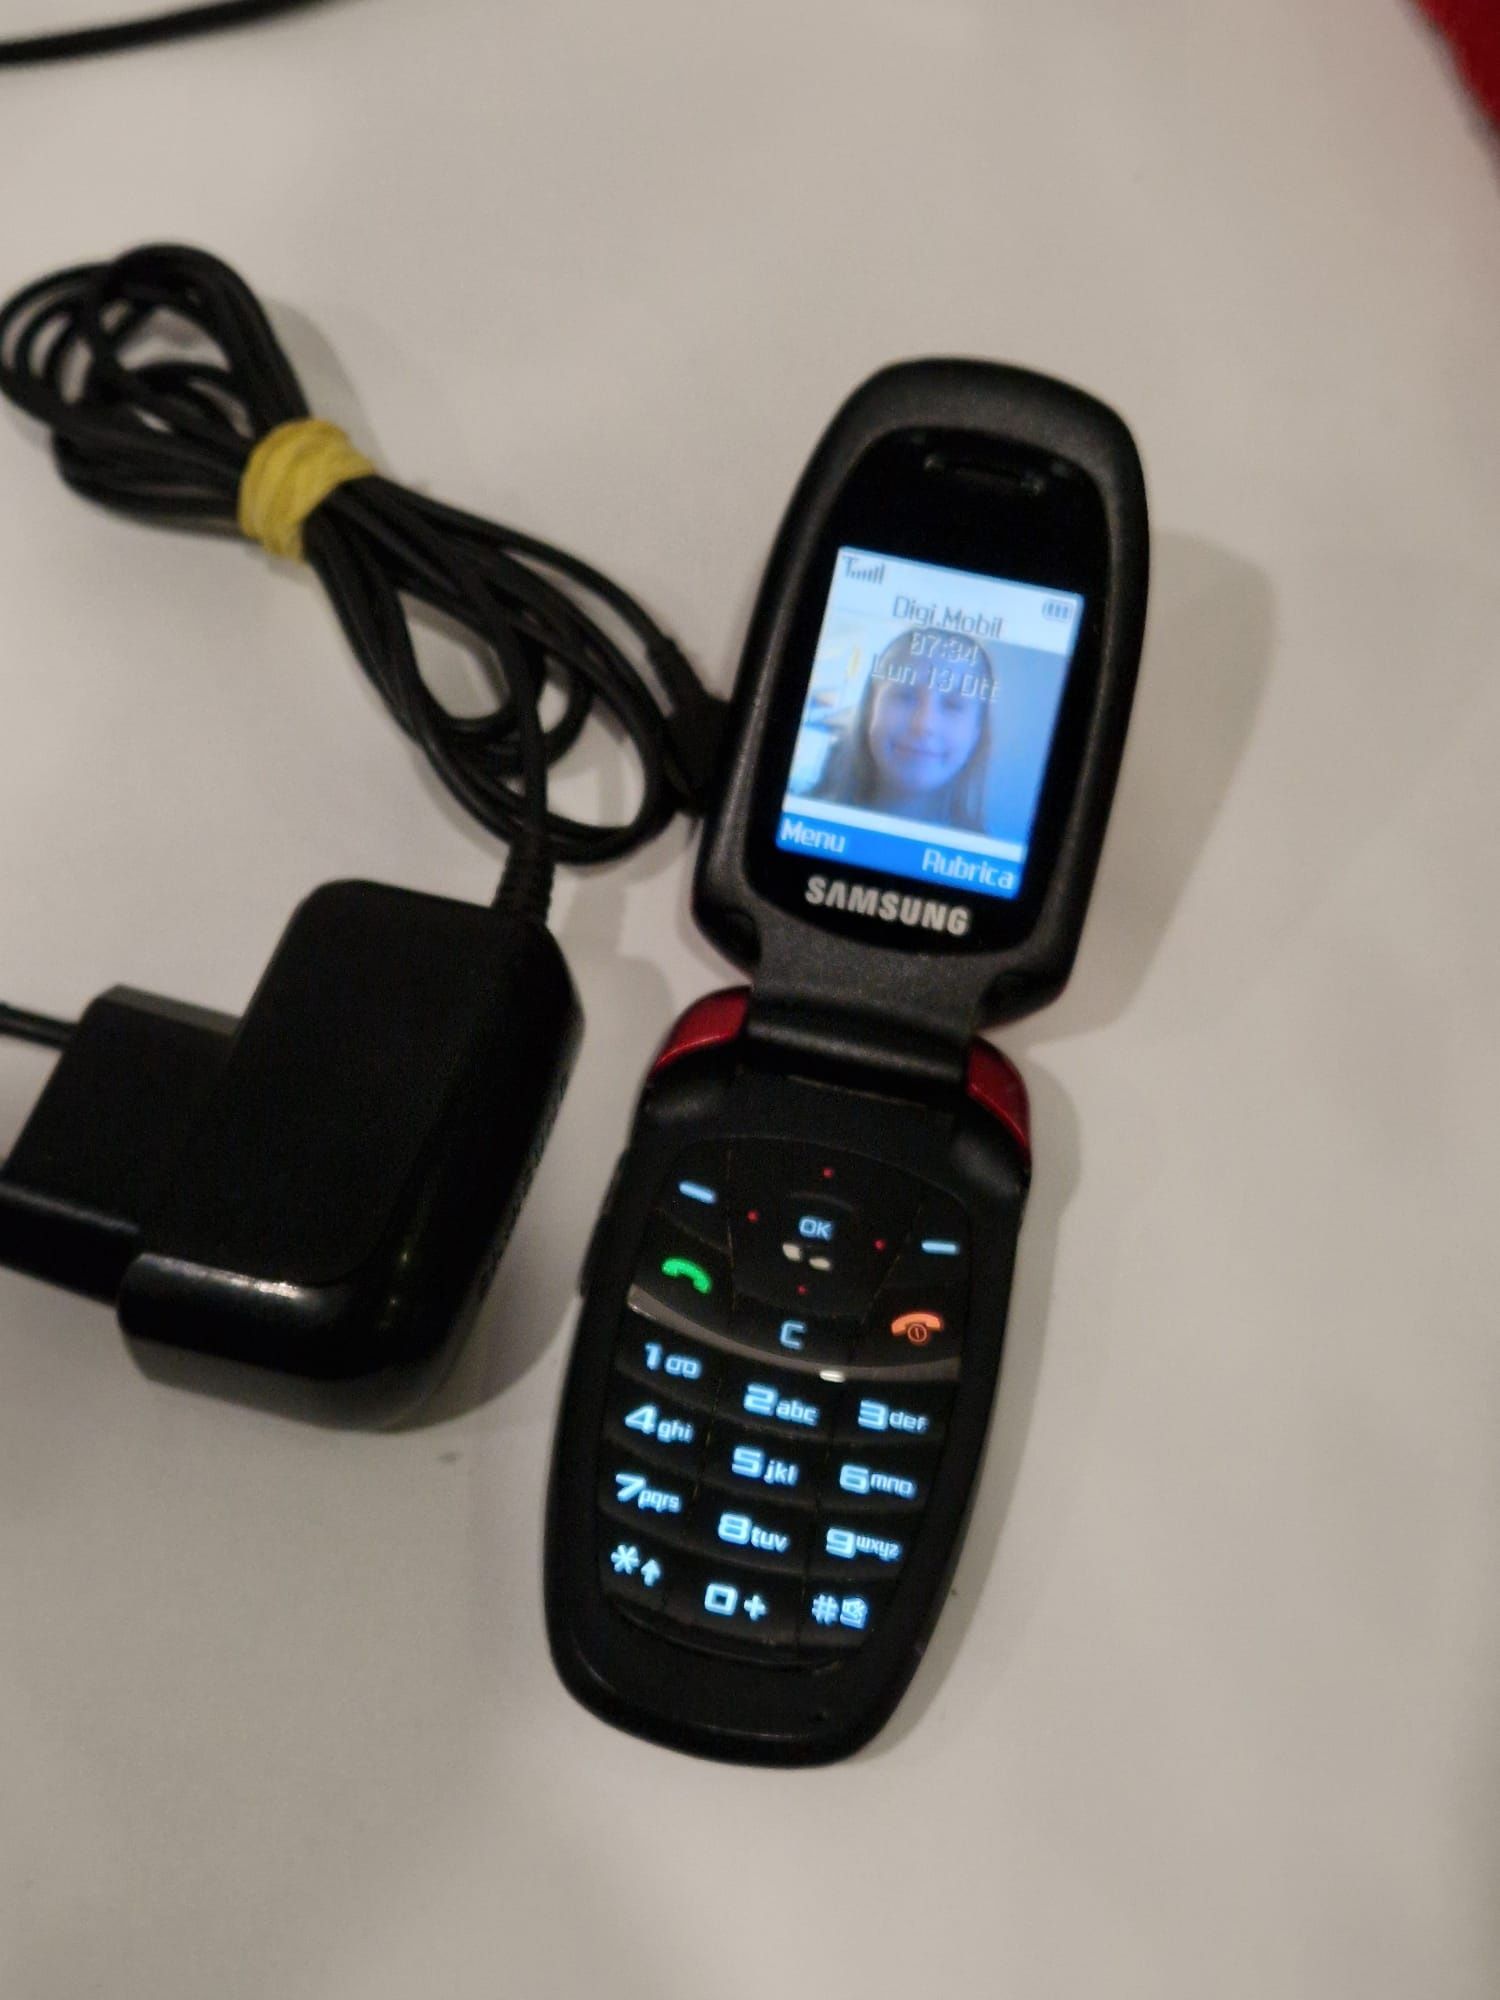 Telefon cu clapeta SGH-C520 cu incarcator